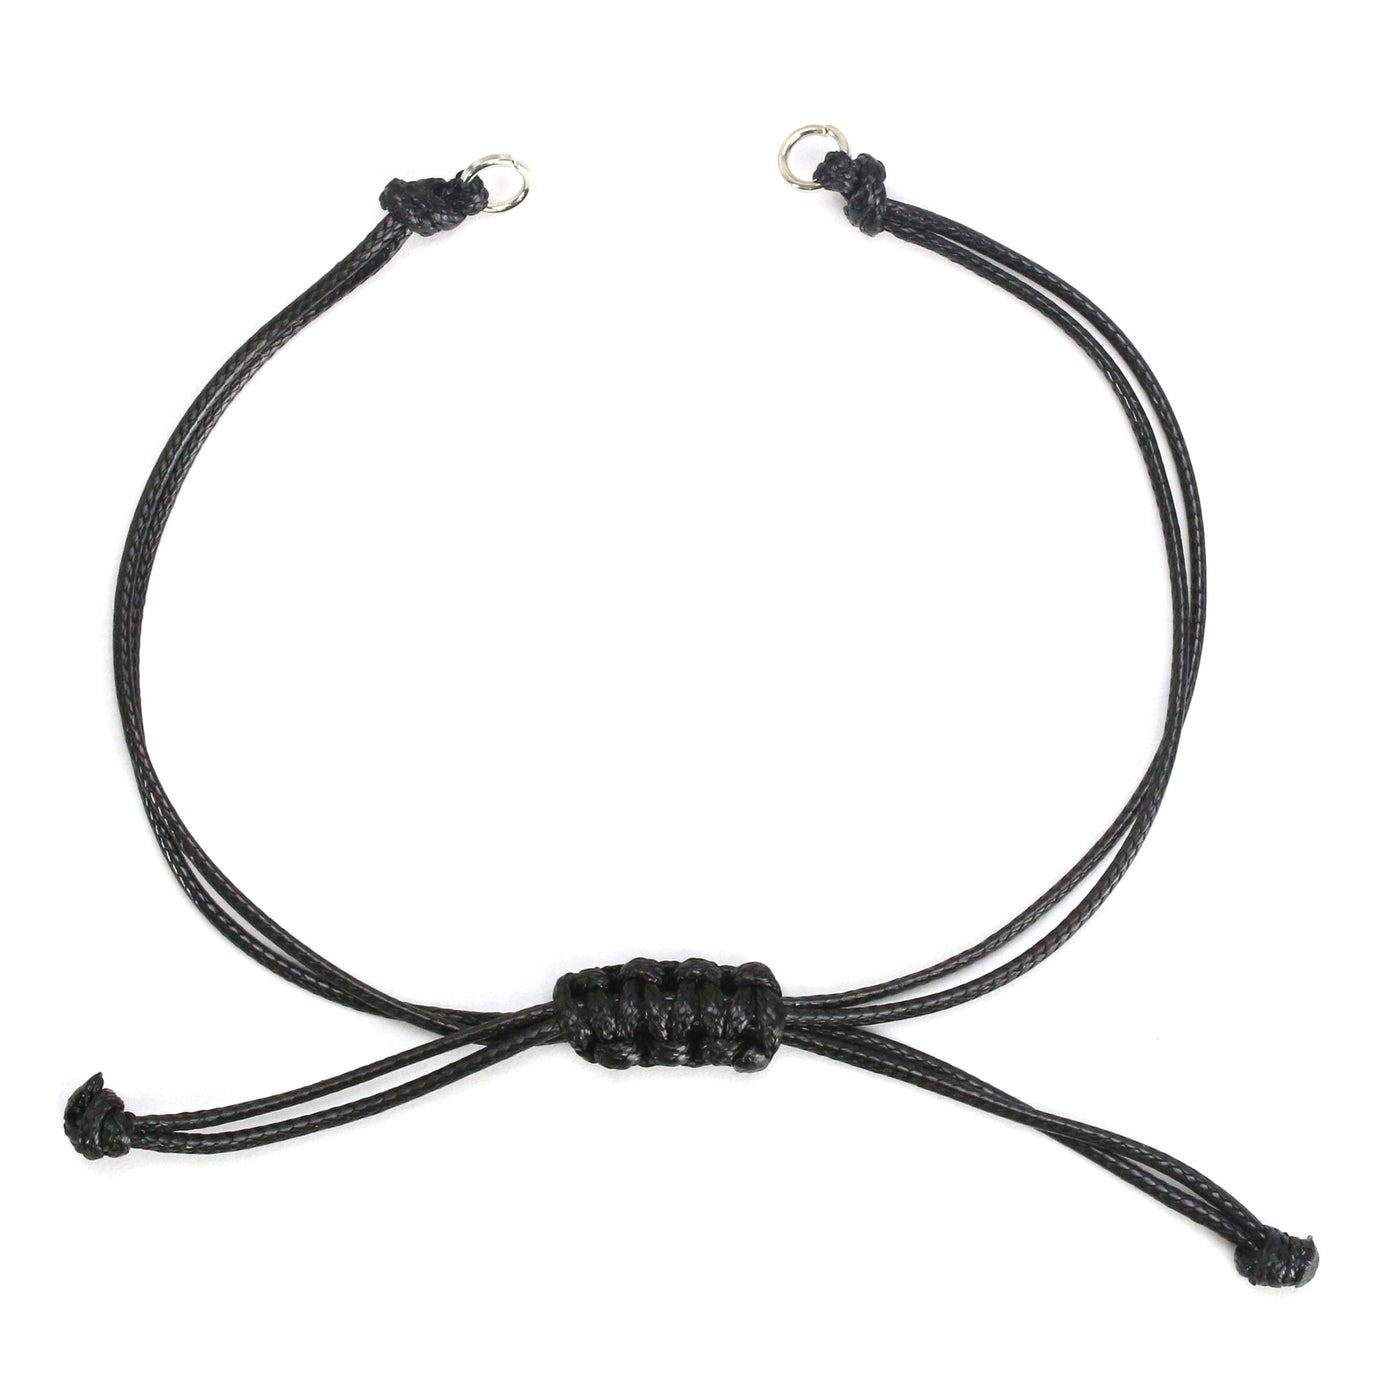 Black Nylon Adjustable String Bracelet with Decorative Slide Knot